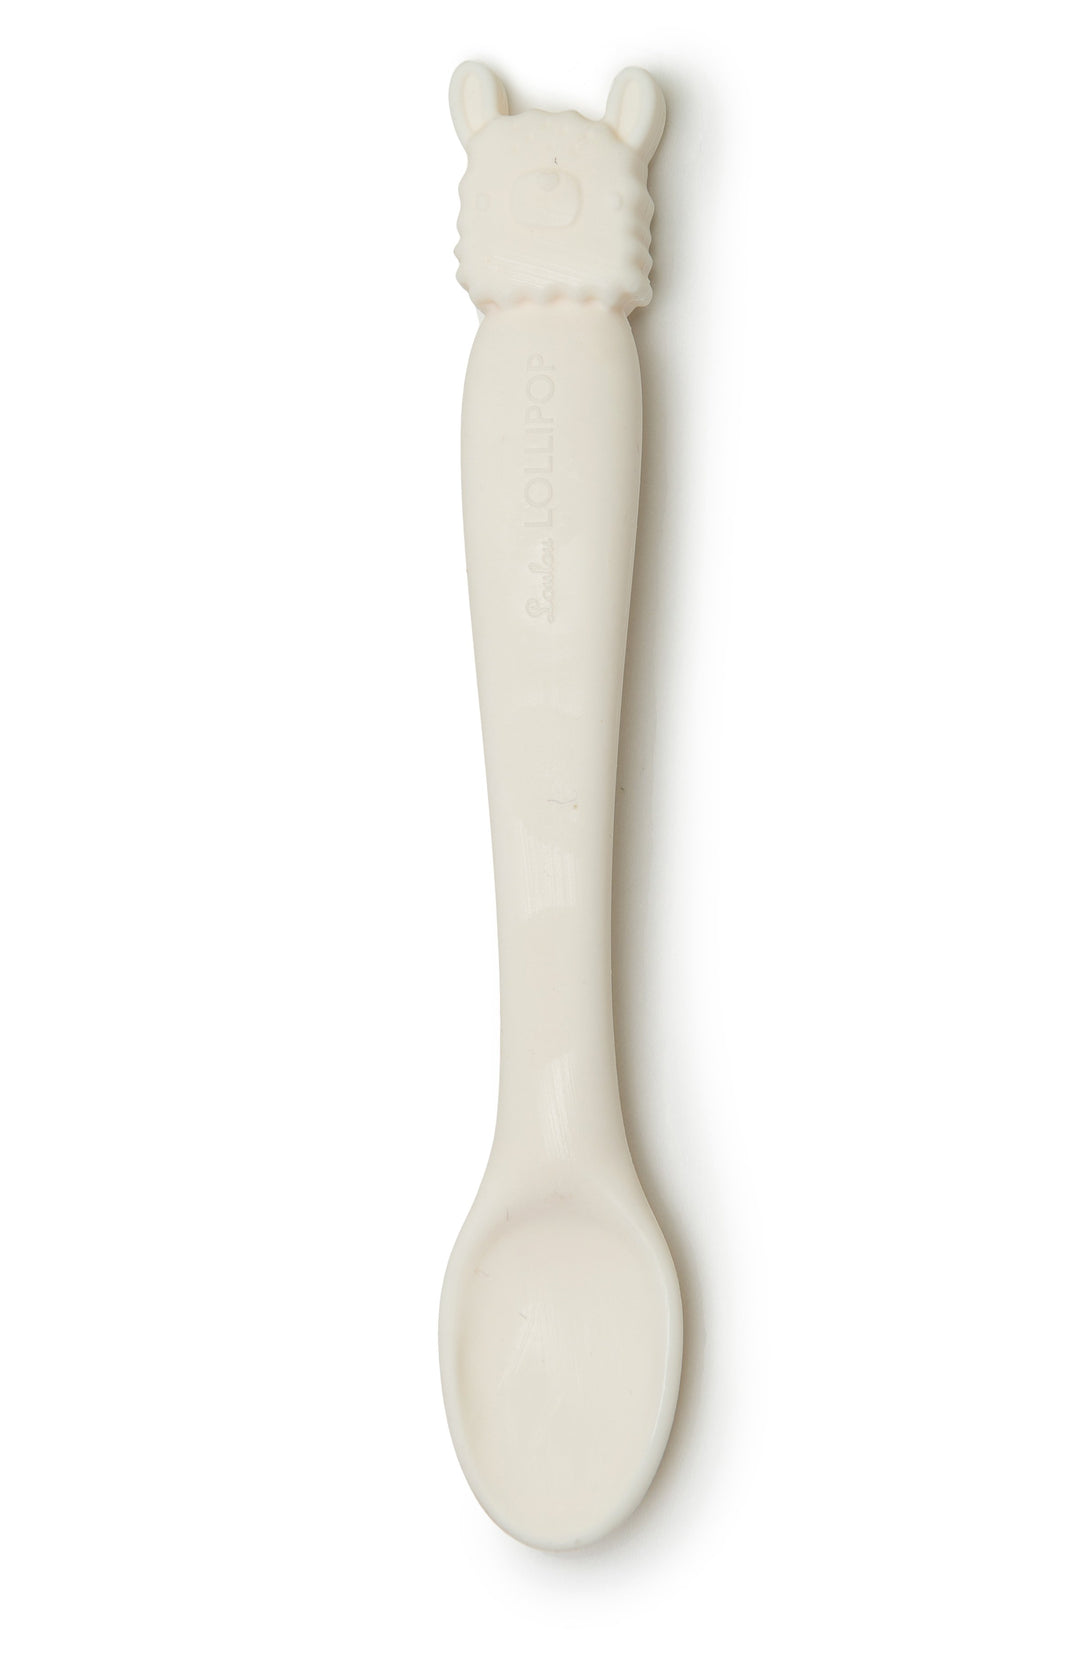 Llama cream Silicone Infant Feeding Spoon from LouLou Lollipop